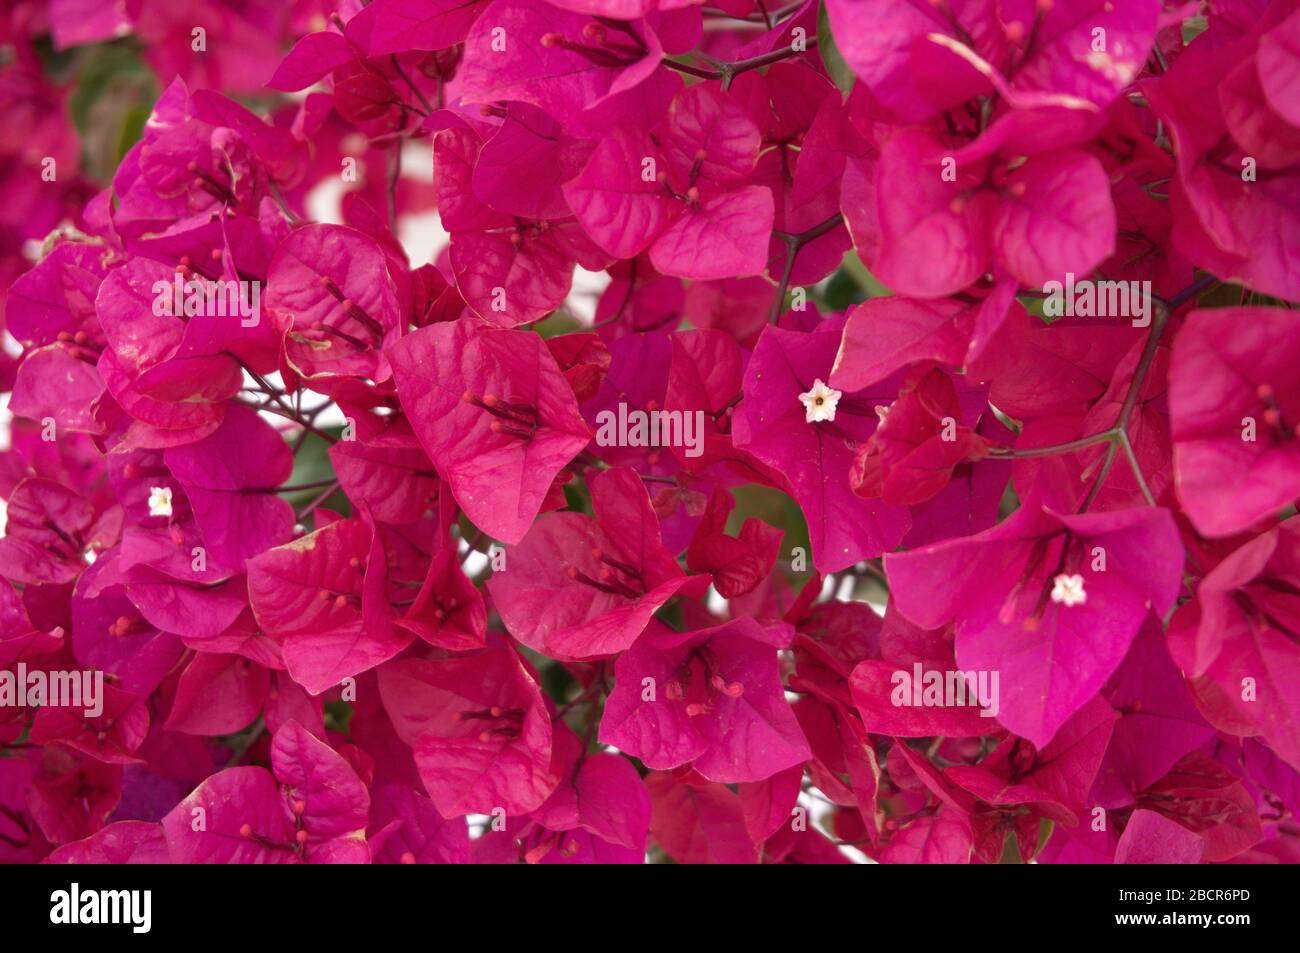 Dominierende Farbe fuchsia Stockfoto